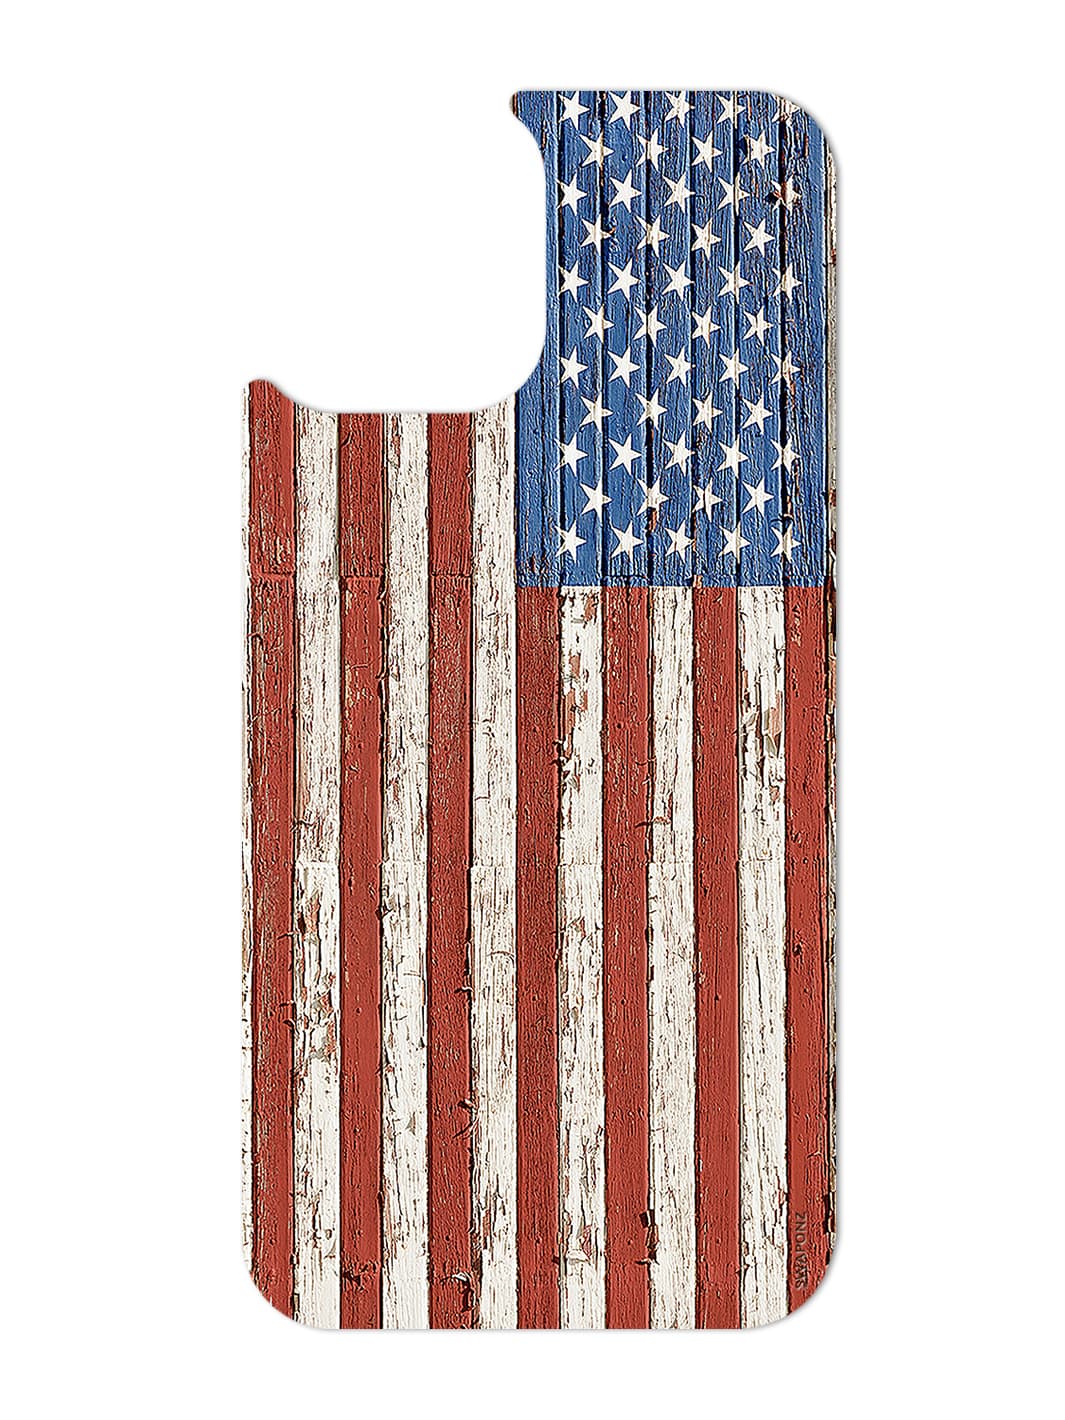 Phone Case Set - USA Flag